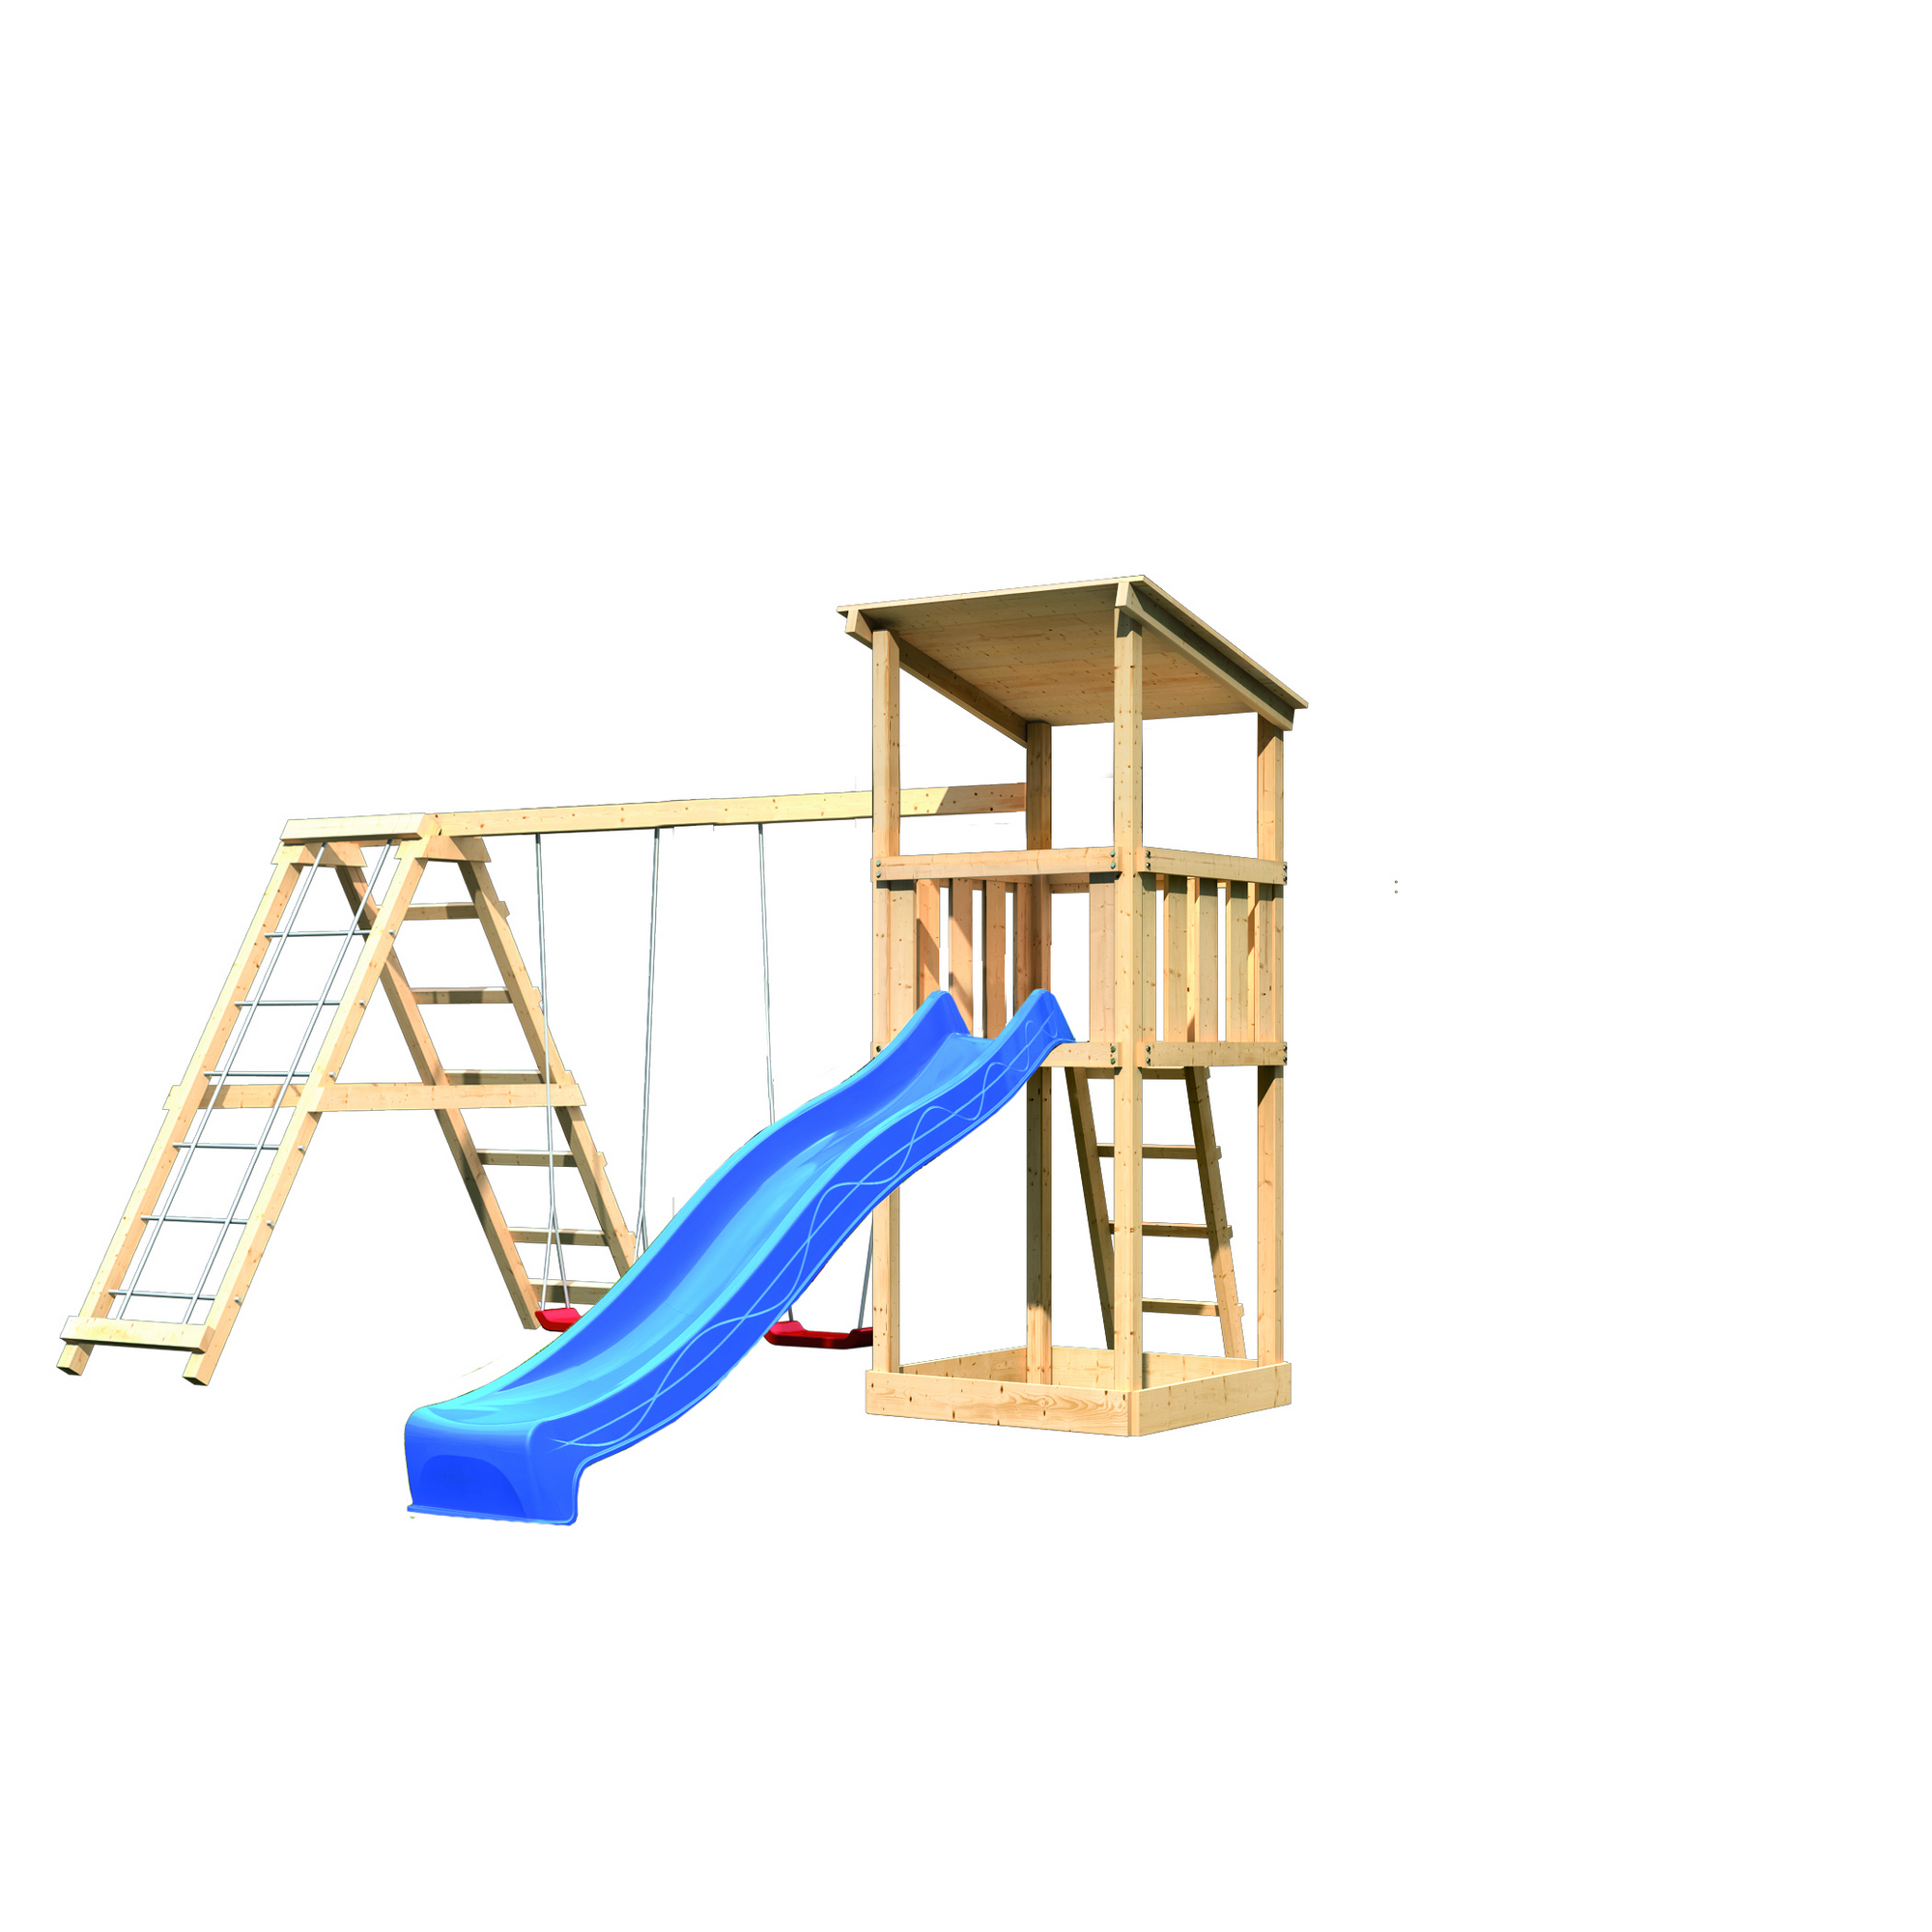 Spielturm 'Anna' Doppelschaukel, Klettergerüst, Rutsche blau, 415 x 264 x 270 cm + product picture